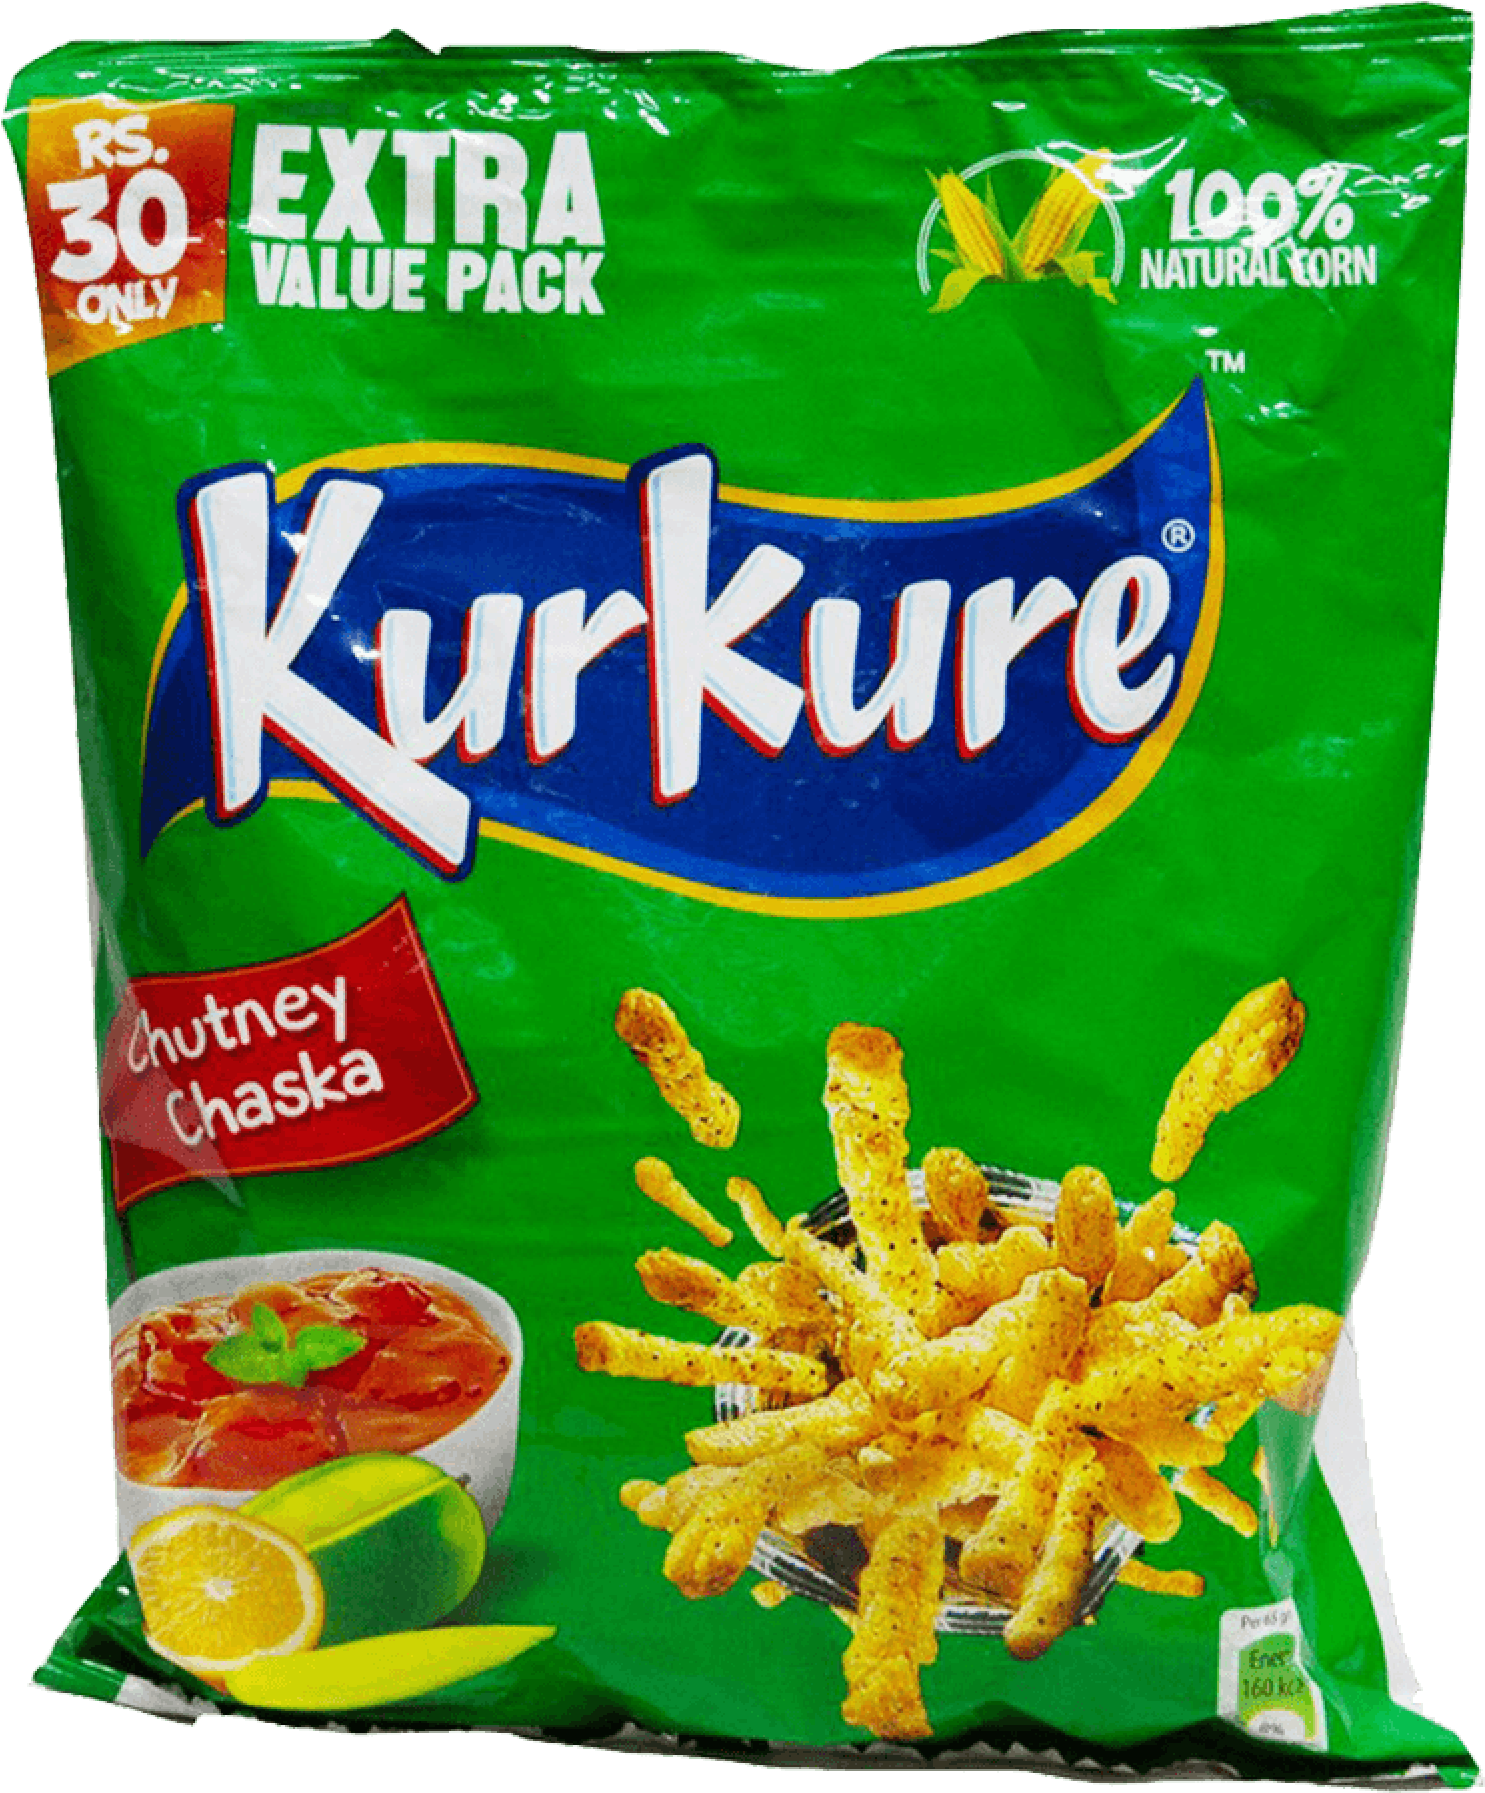 Kurkure Chutney Chaska Extra Value Pack PNG image